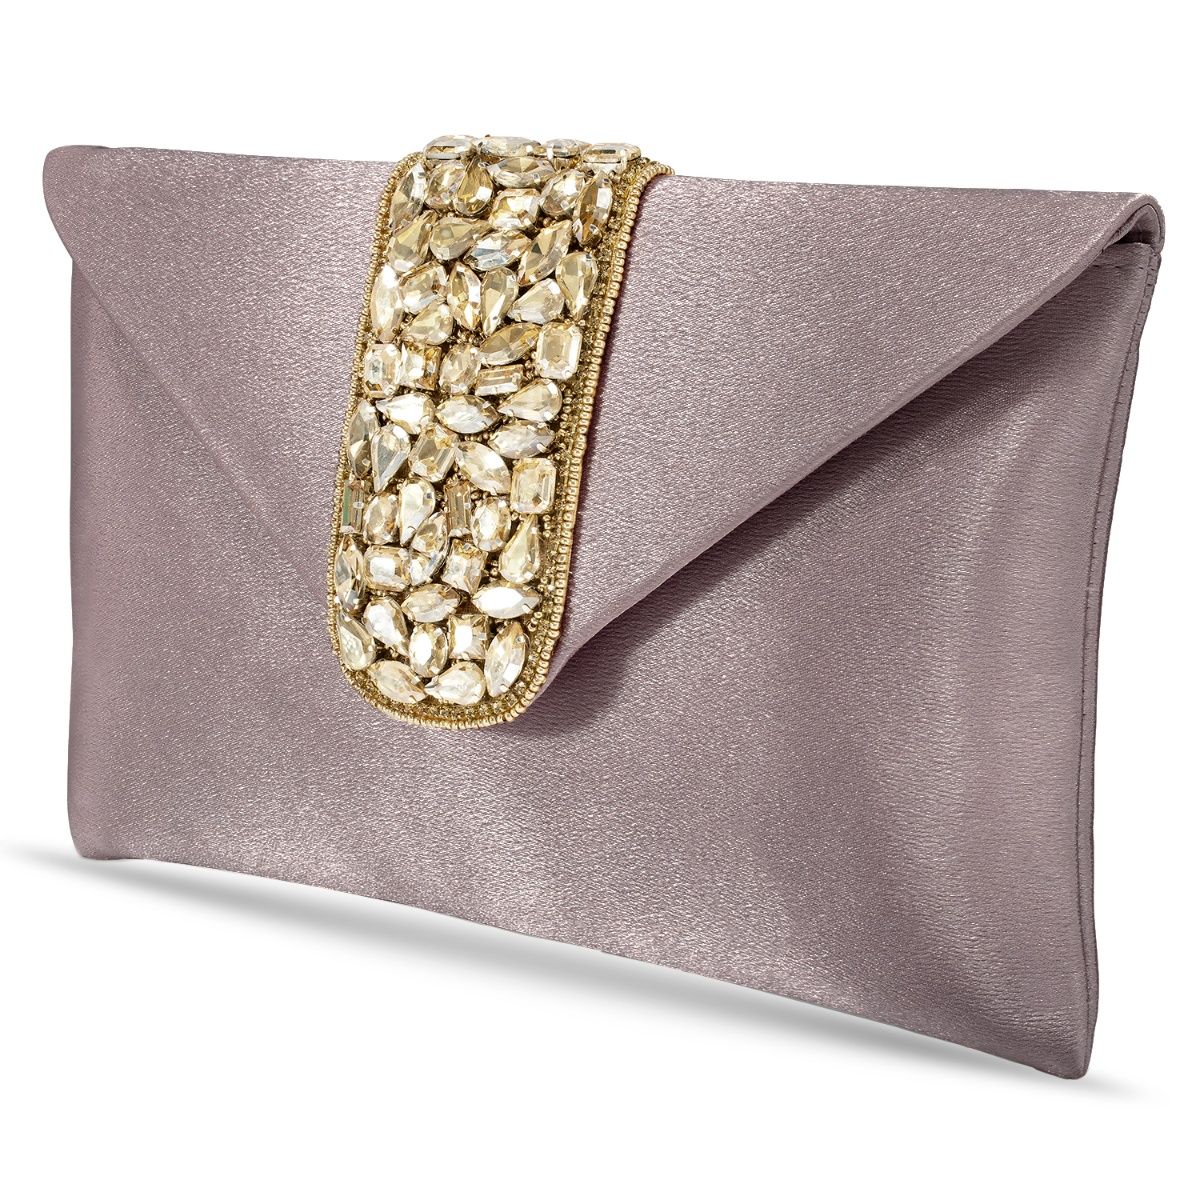 LeahWard Mini Bow Bags Small Size Cute Patent Handbags Cross Body Bag - Rose  Gold Wedding Purse : Amazon.in: Shoes & Handbags